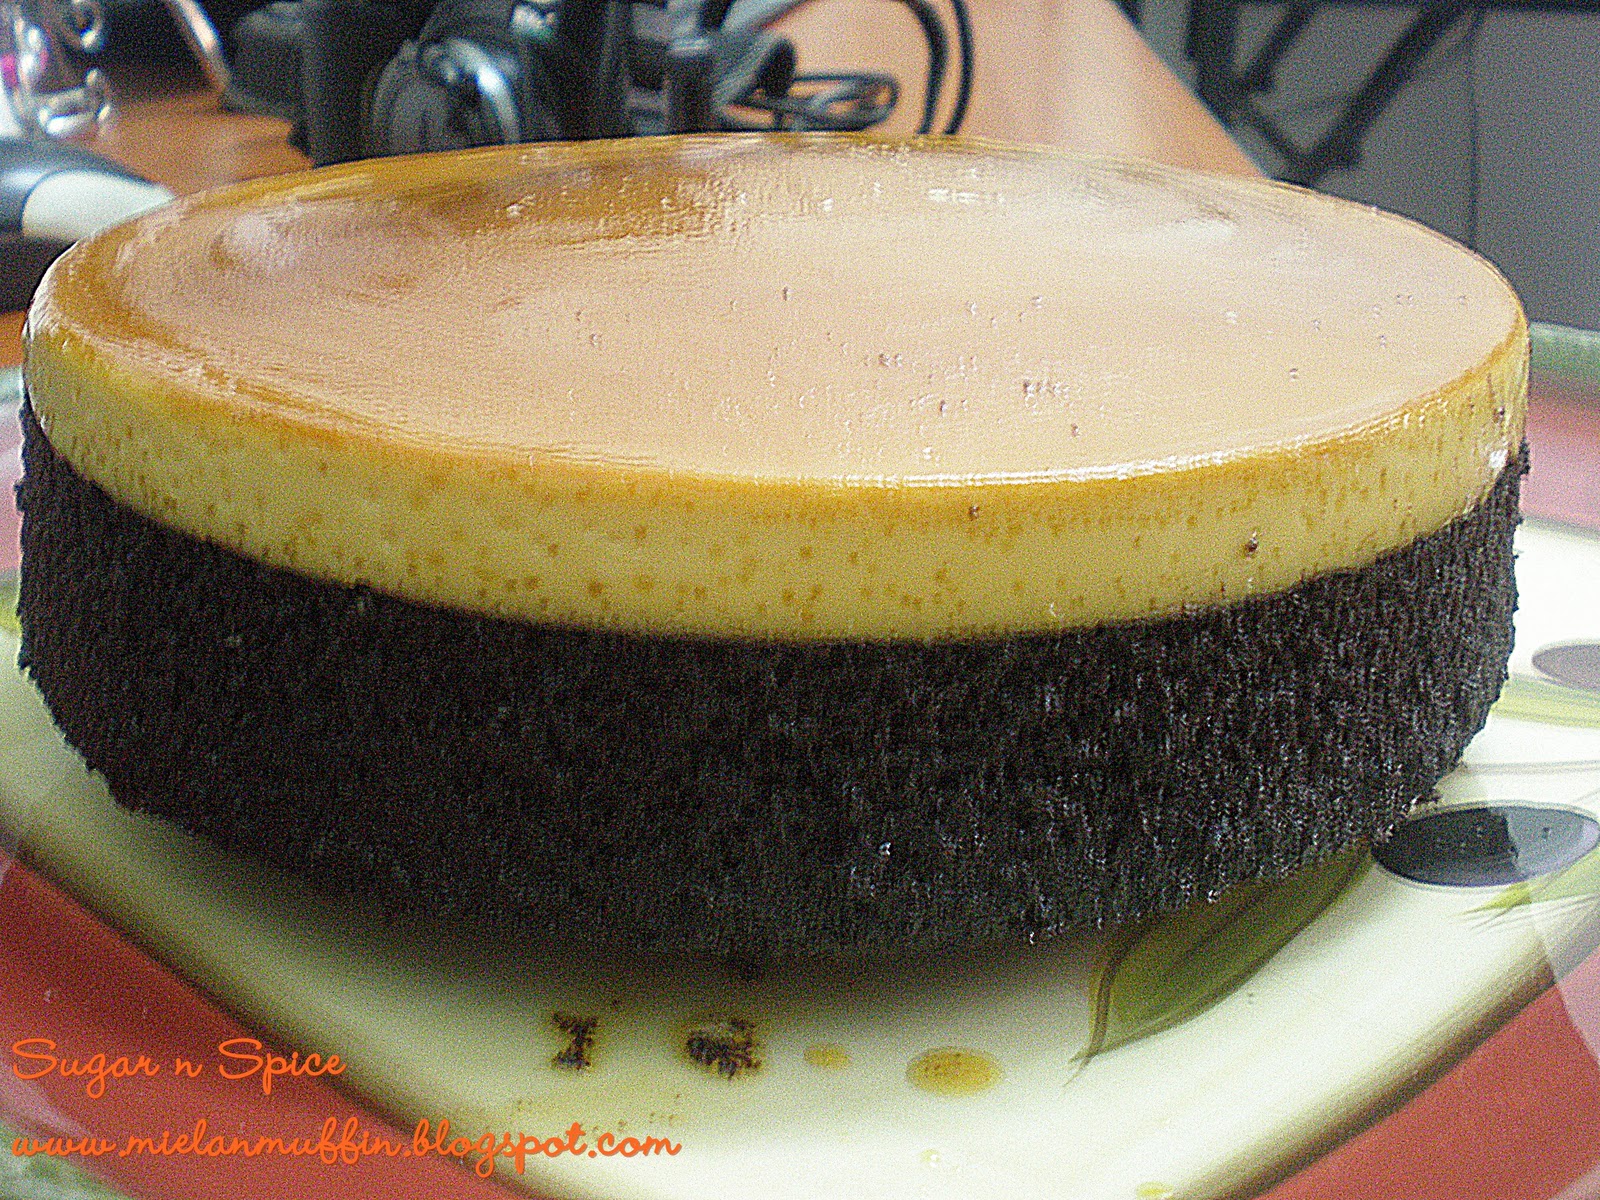 Sugar 'n' spice: Moist Chocolate Caramel Cake